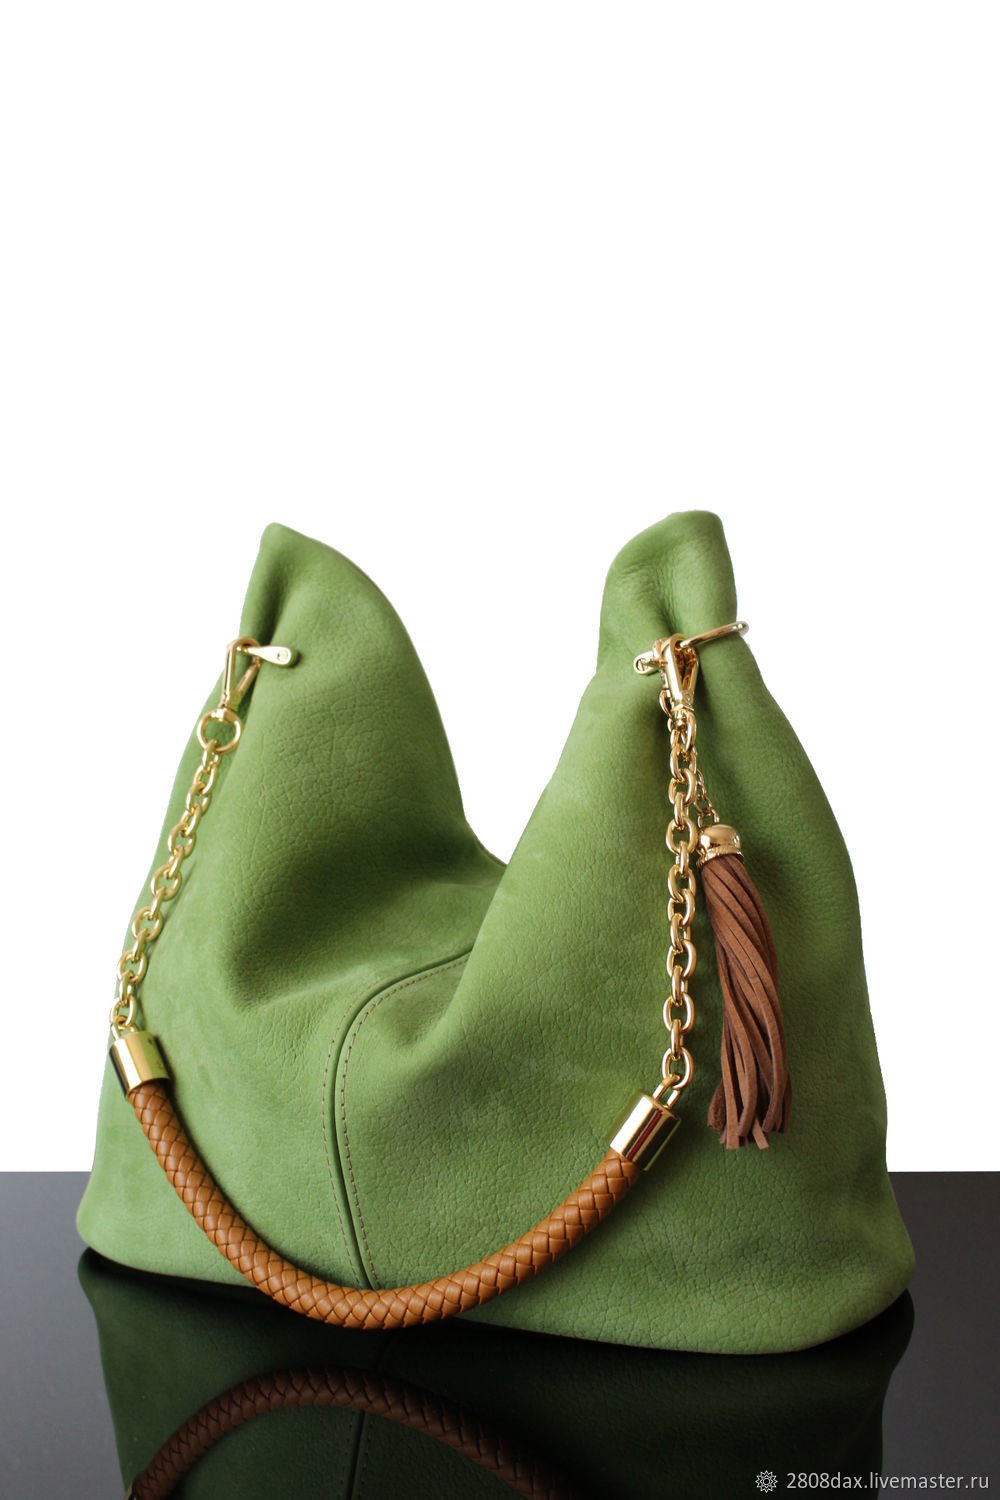  Suede Bag Green Apple, Crossbody bag, Bordeaux,  Фото №1